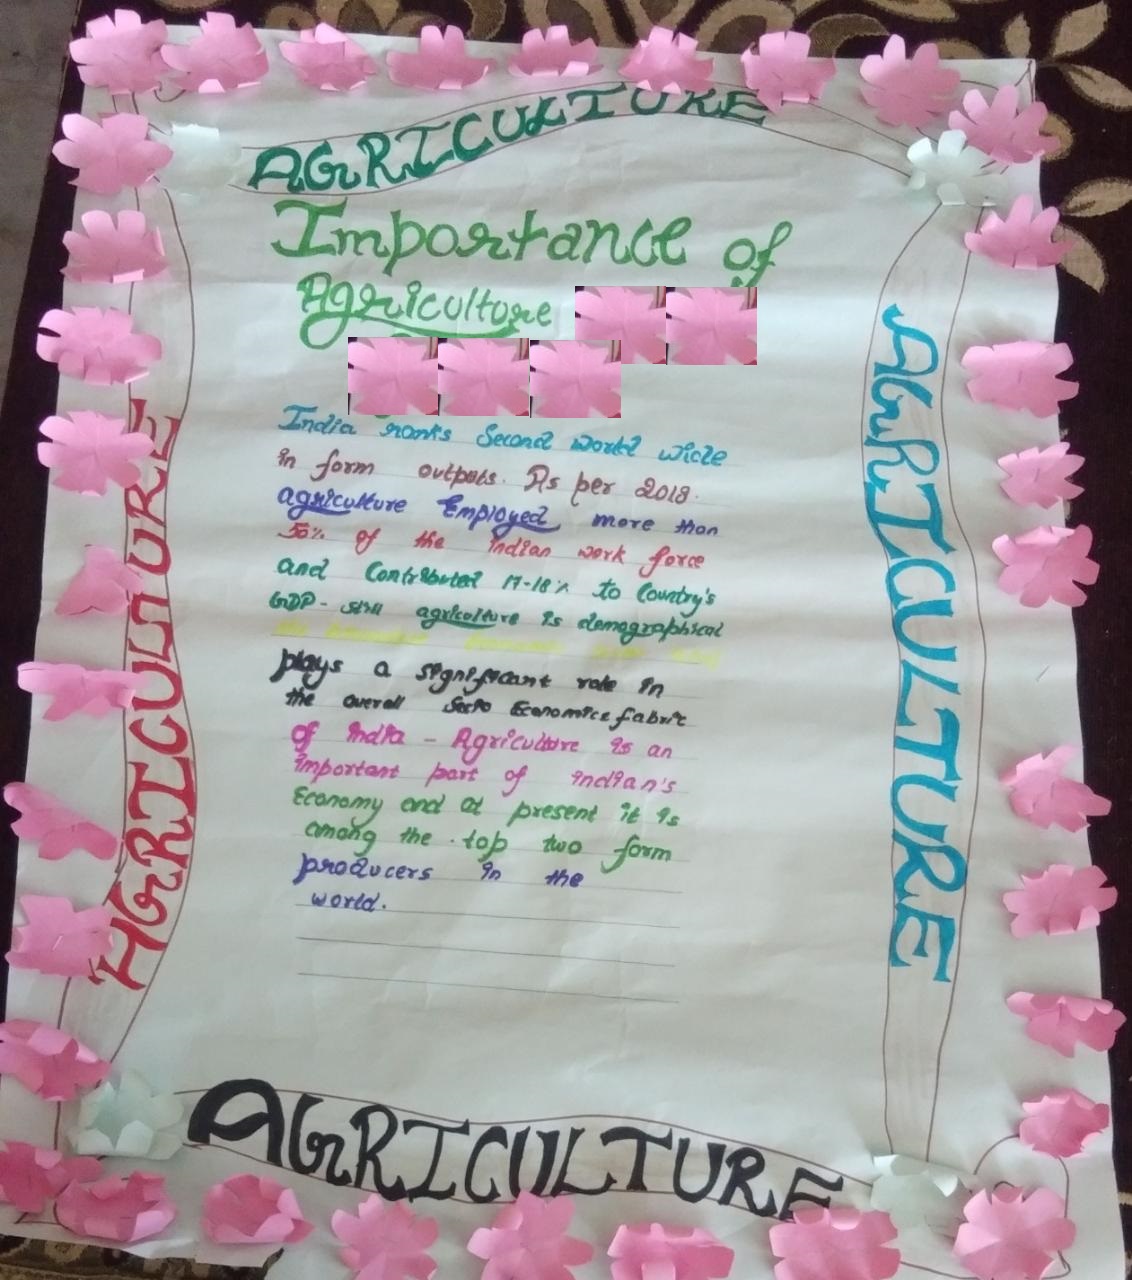 duvasu-celebrates-agriculture-education-day-3rd-december-2020